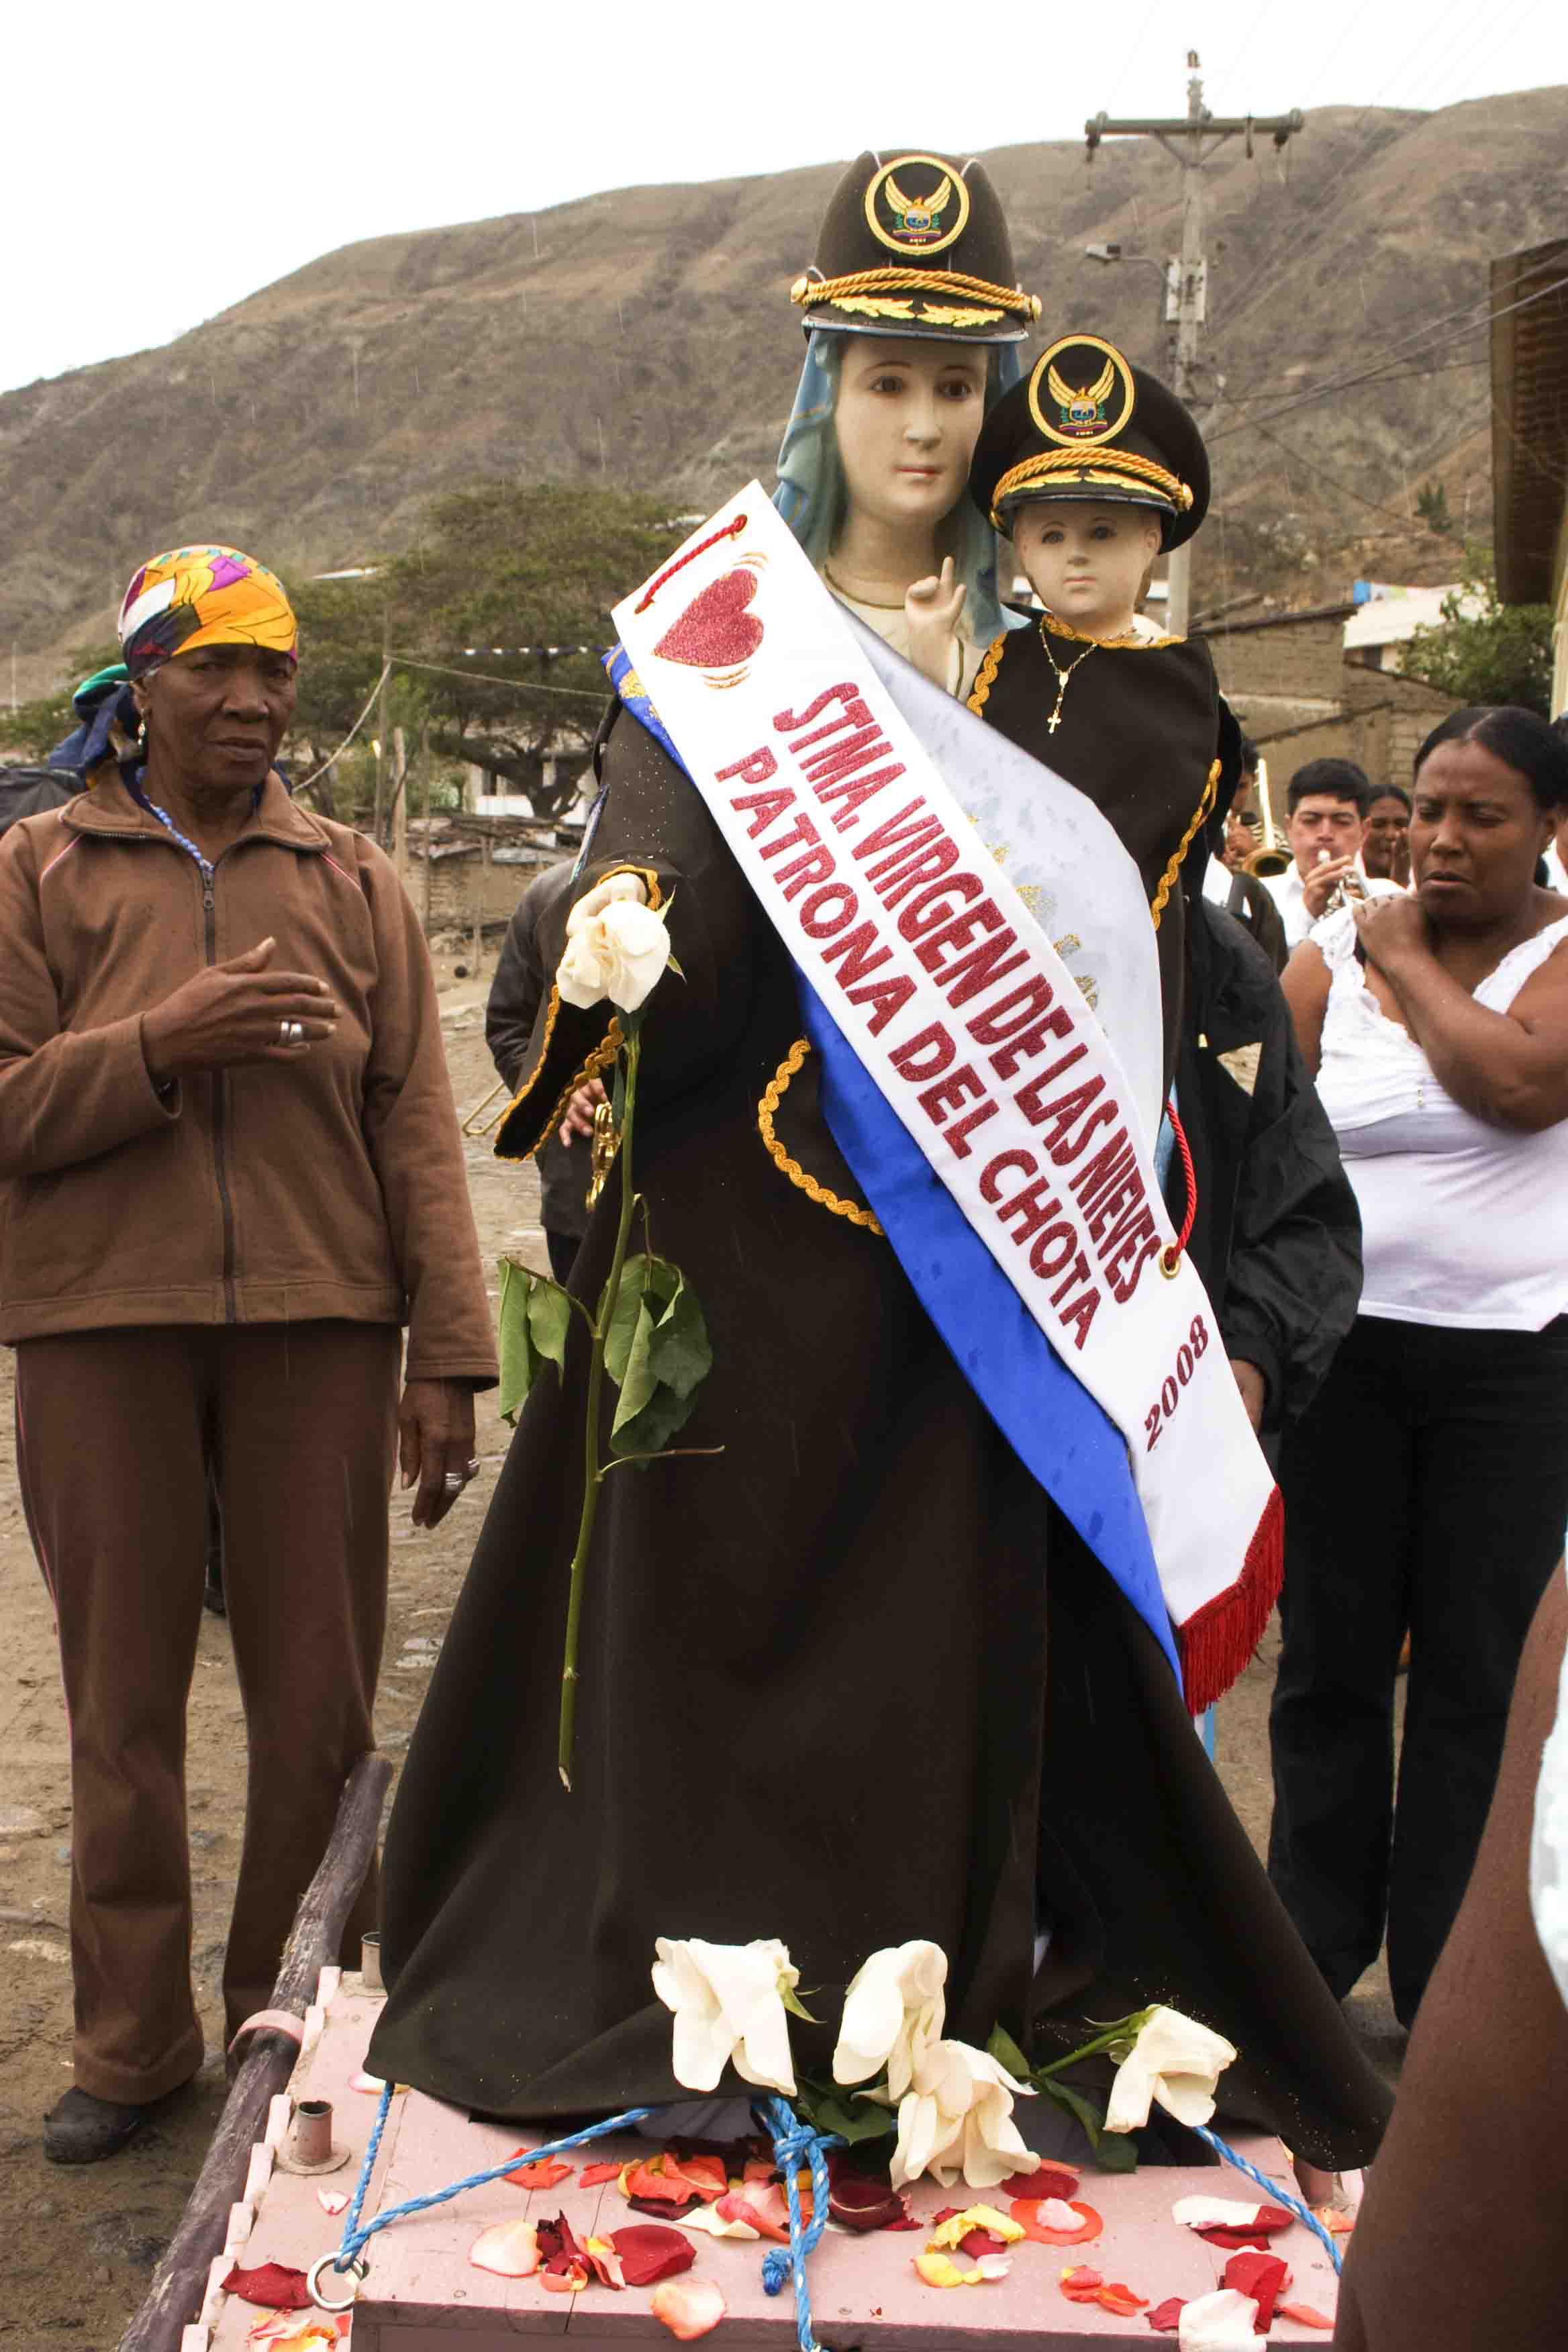 Celebration Virgen de las Nieves-Chota community. Procession of the Virgen de las Nieves. 